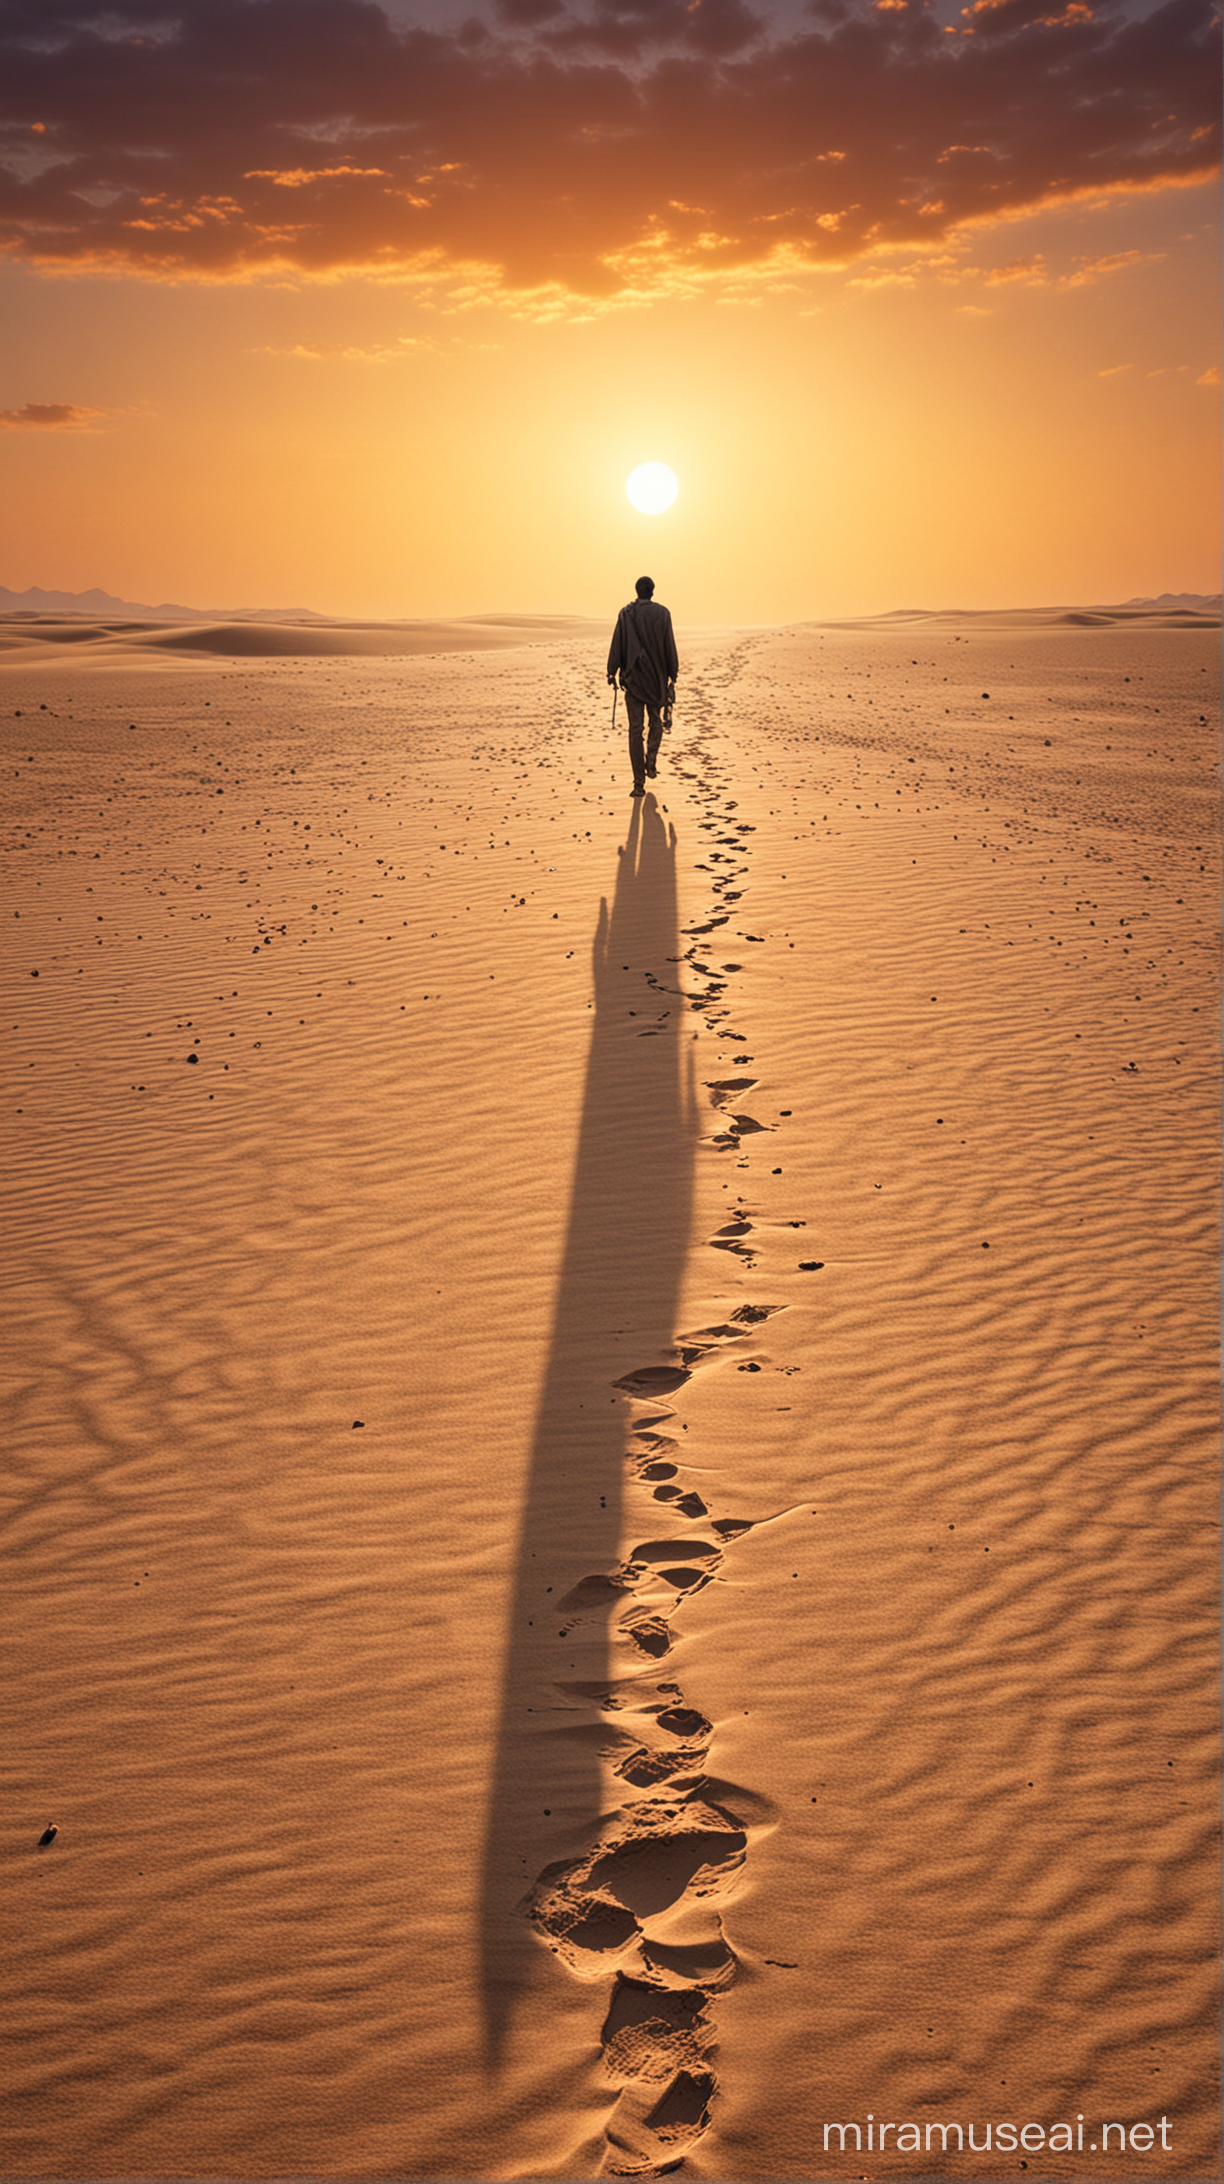 Lonely Journey A Poor Man Trekking through the Vast Desert at Sunset